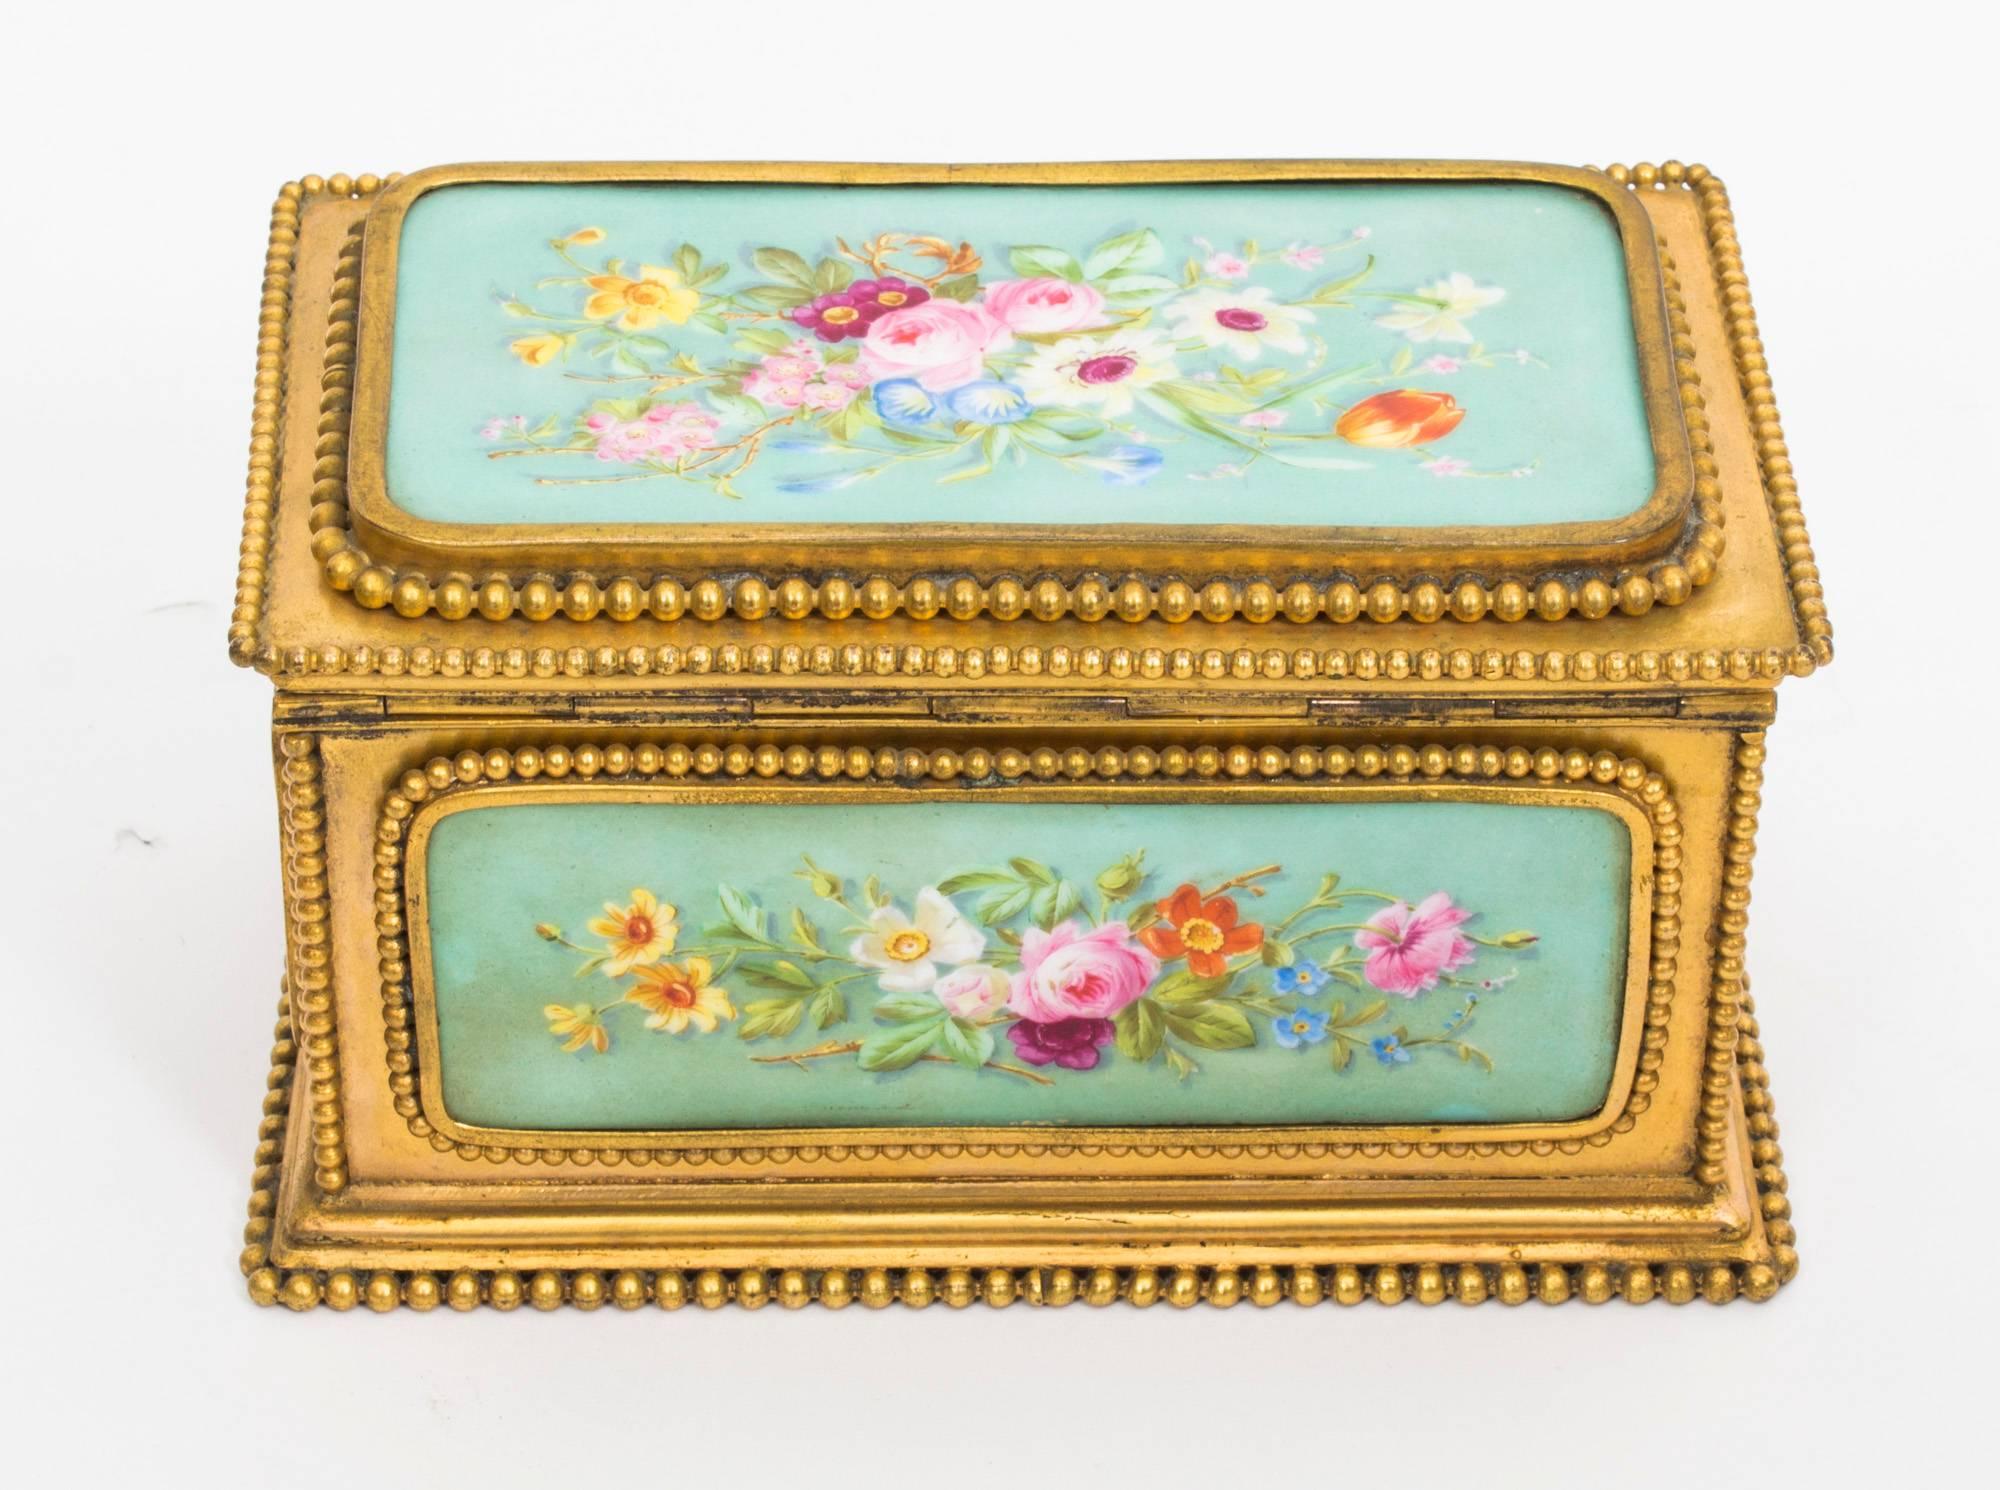 19th Century Porcelain and Ormolu Jewel Casket Box by Tahan 1